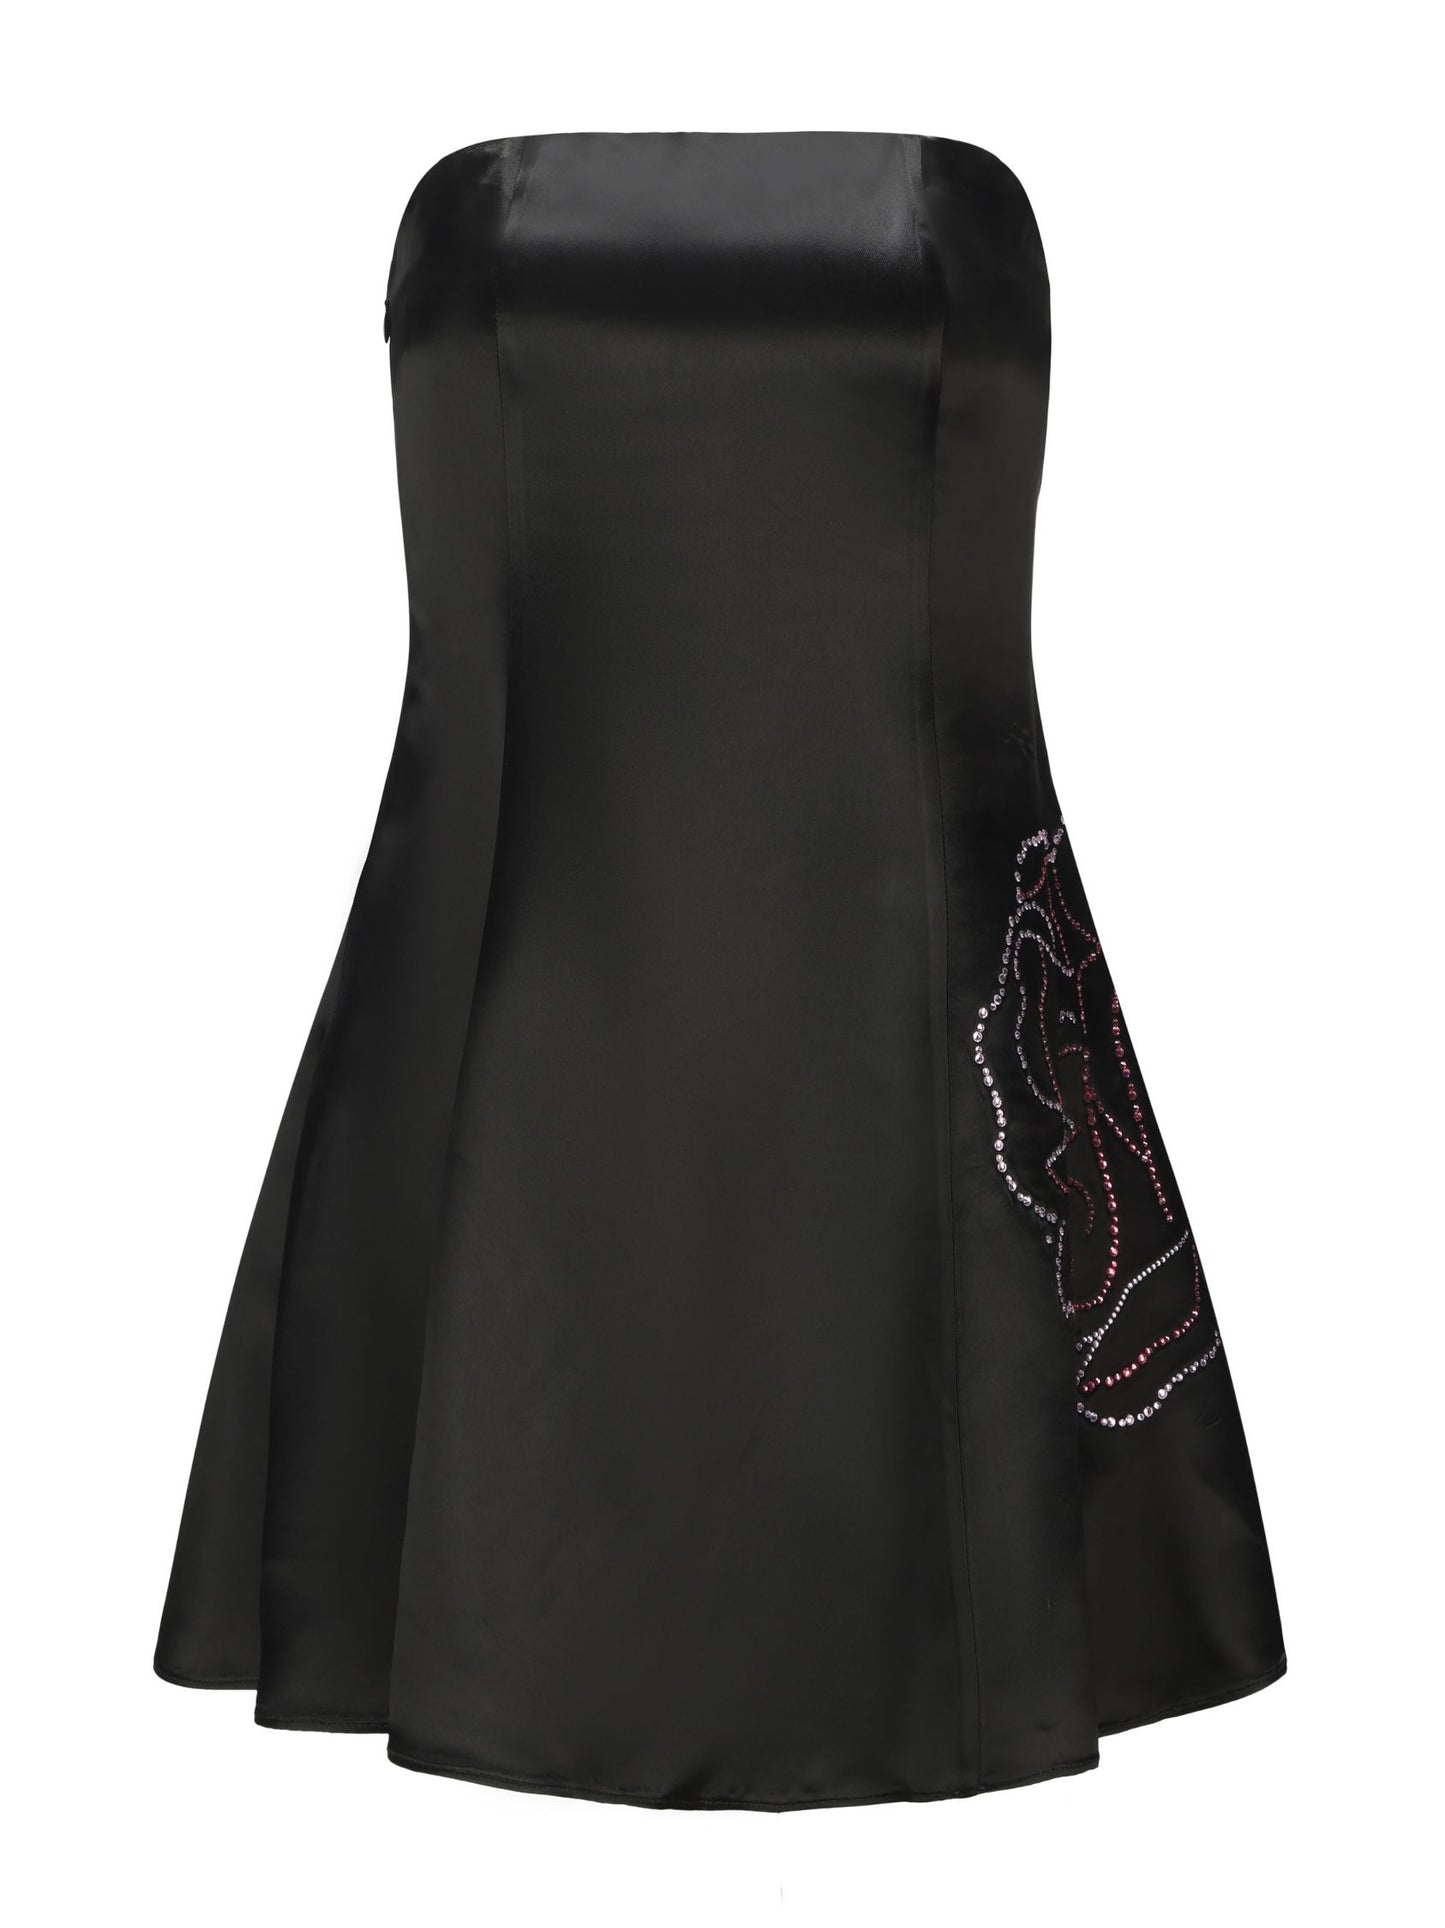 Victoria Rose Dress (Black) (Final Sale)